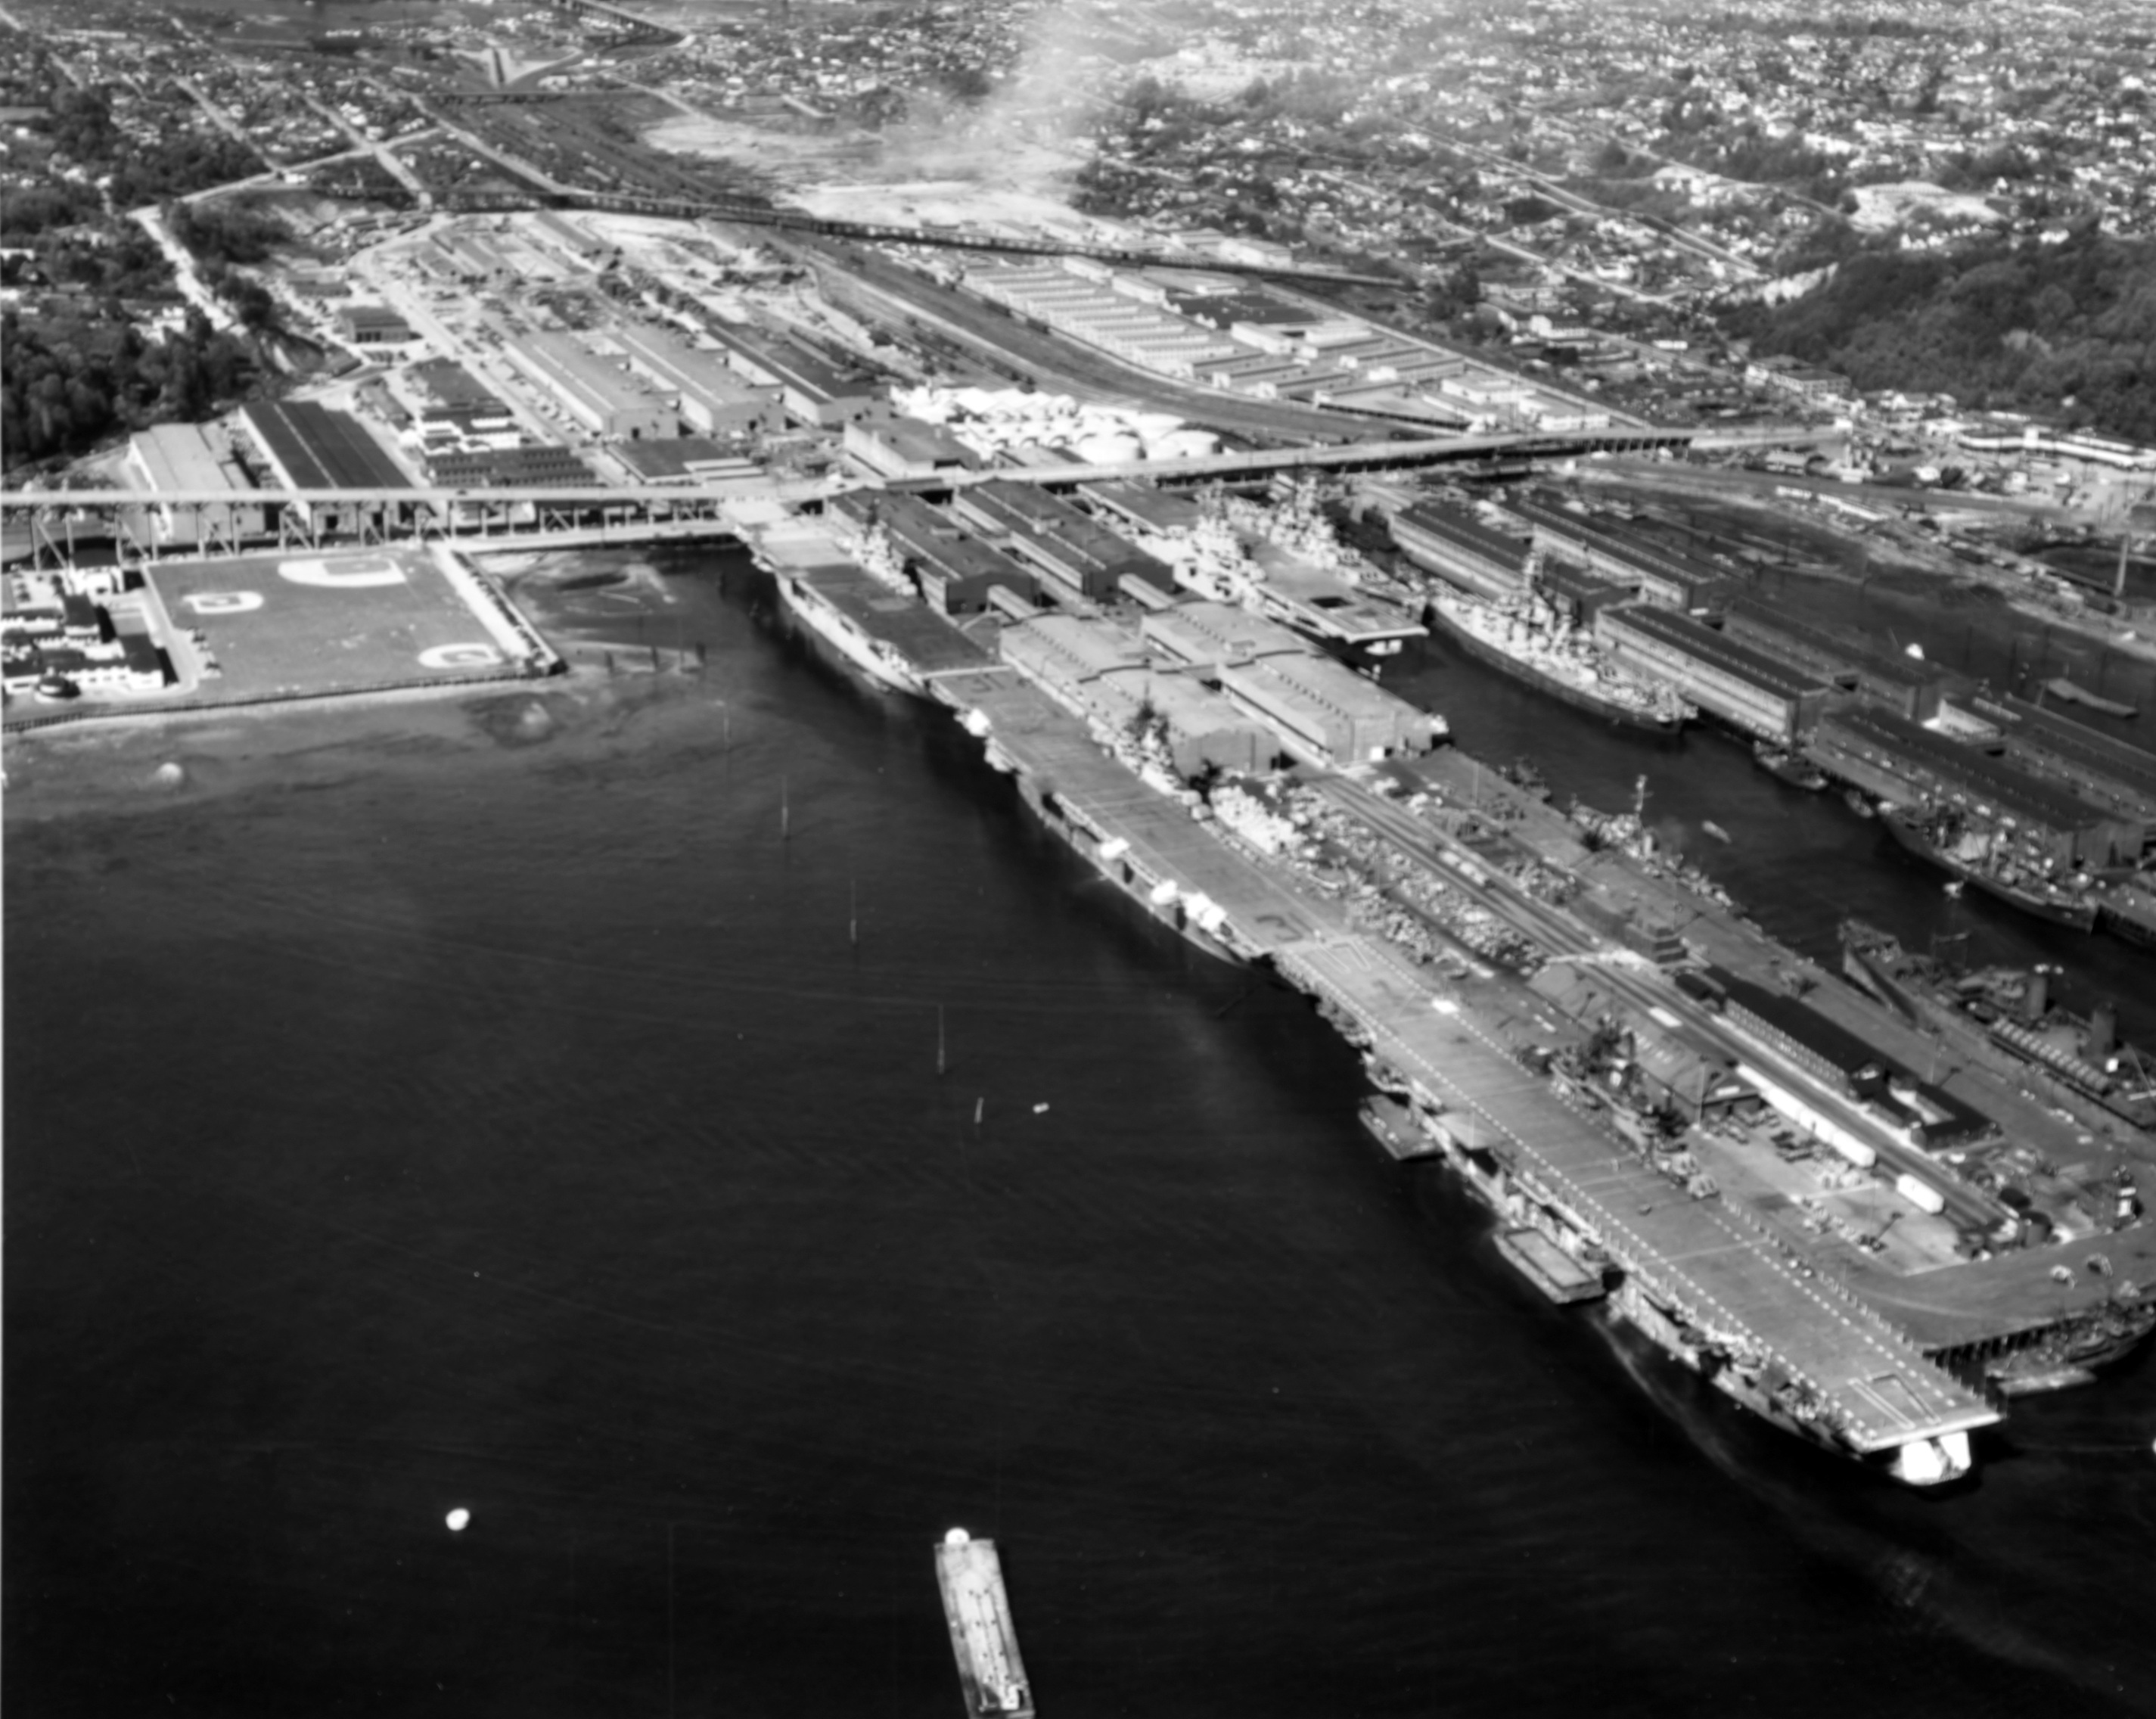 USS Bunker Hill, USS Bon Homme Richard, USS Essex, USS Ticonderoga, USS Indiana, and USS Alabama at Pier 92, Seattle, Washington, United States, 9 Jan 1947